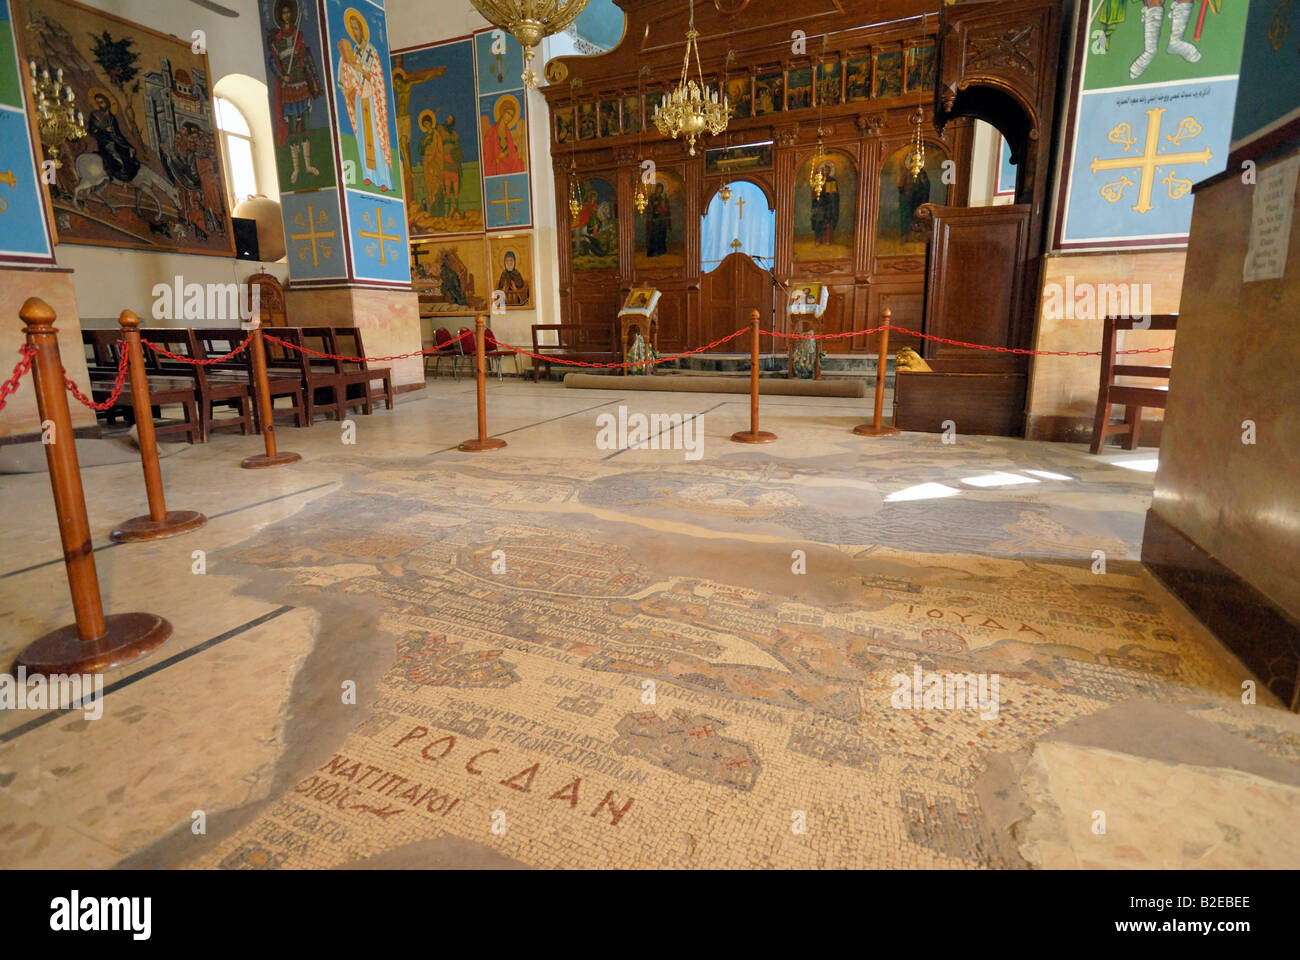 Interiors of basilica, St. George's Basilica, Madaba, Jordan Stock Photo